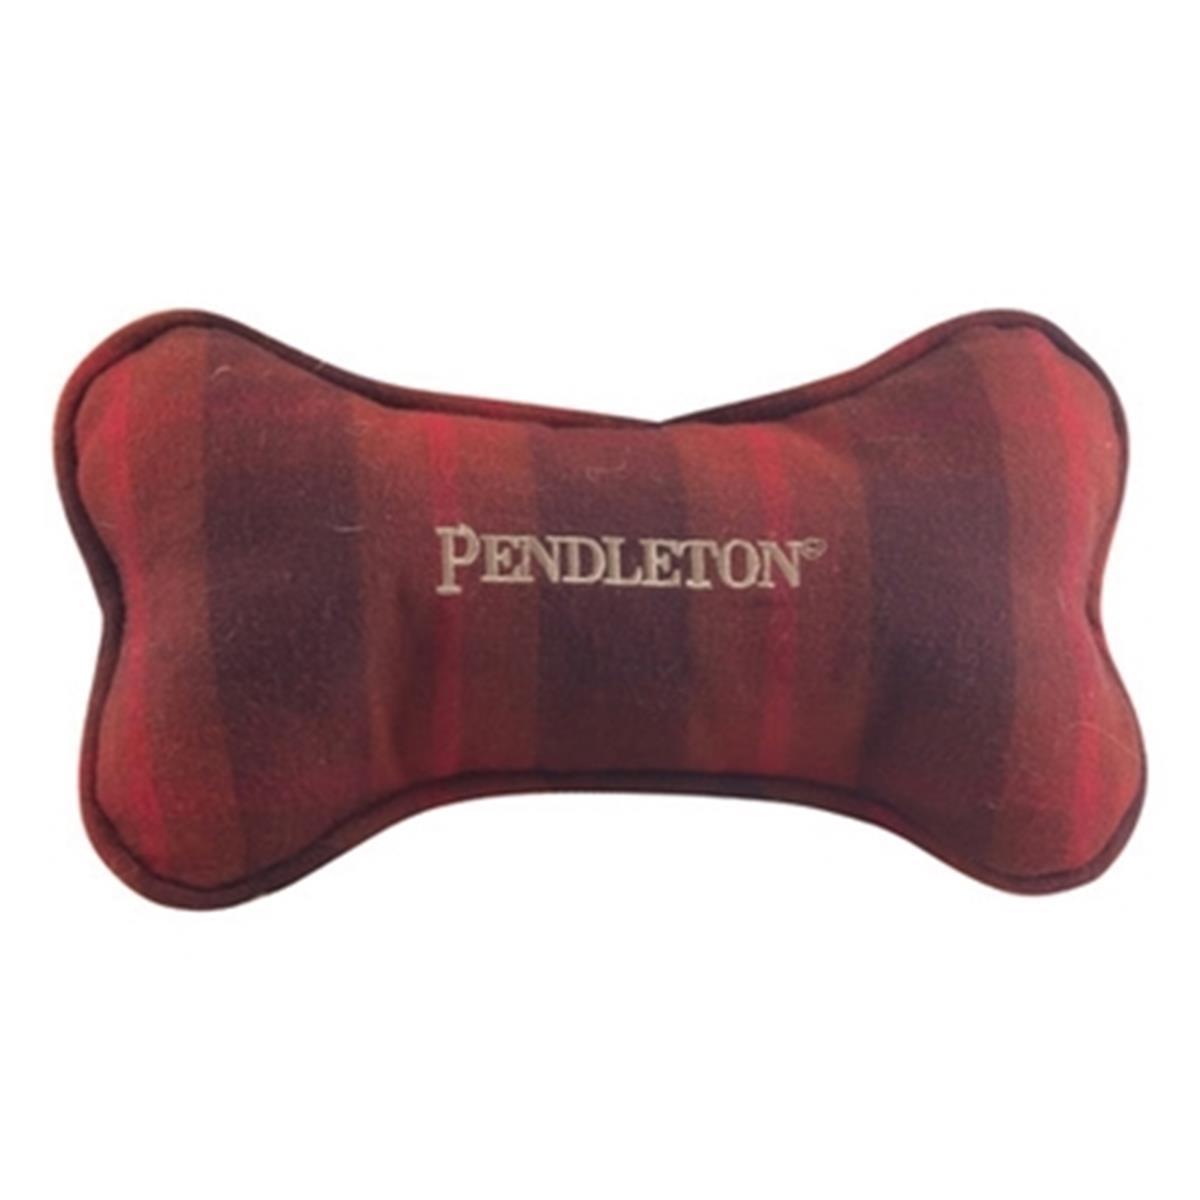 Carolina Pet 0pp7002-chr Pendleton Pet Bone Toy - Charcoal Ombre Plaid